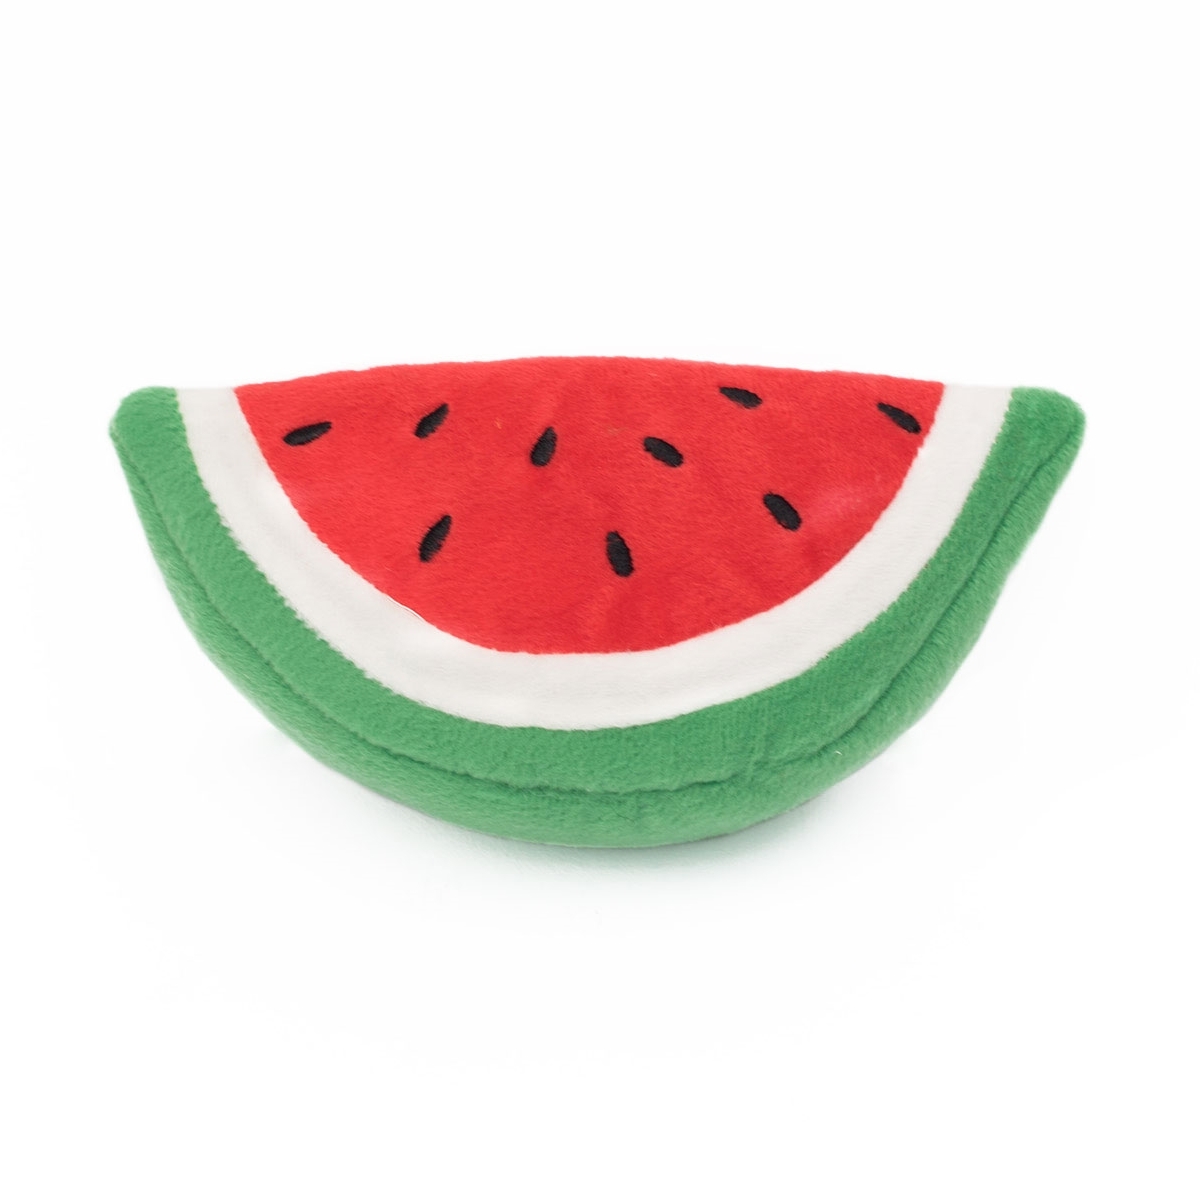 Zippy Paws NomNomz Squeaker Dog Toy - Watermelon image 0